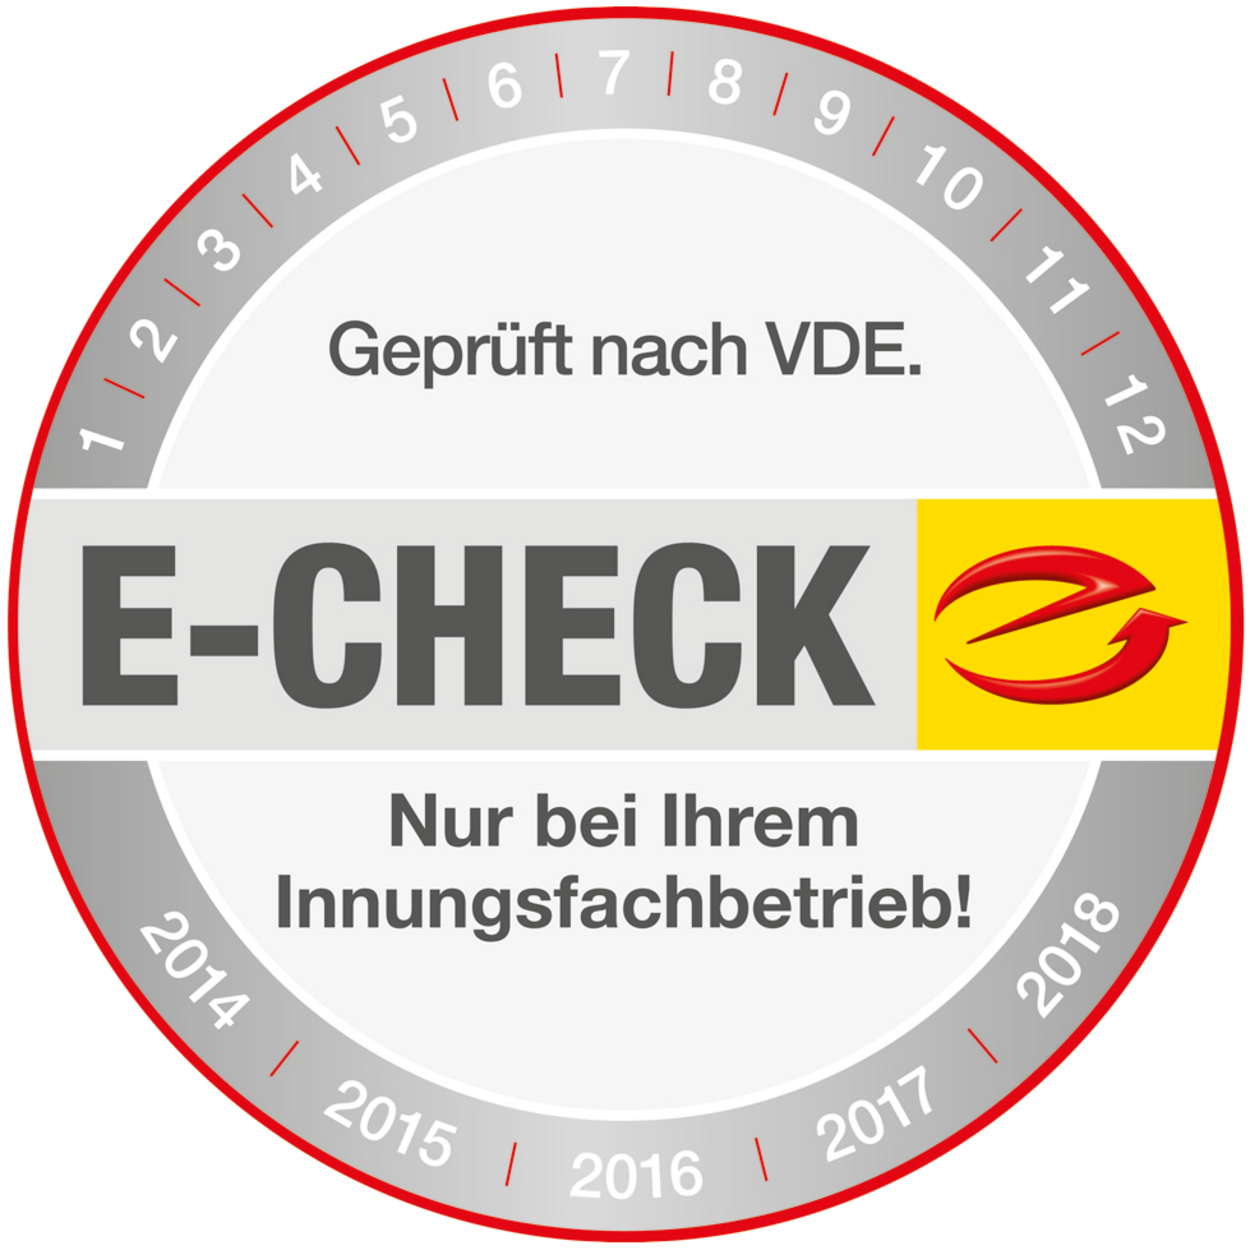 Der E-Check bei Christian Wylezol Elektroinstallation in Rosenheim